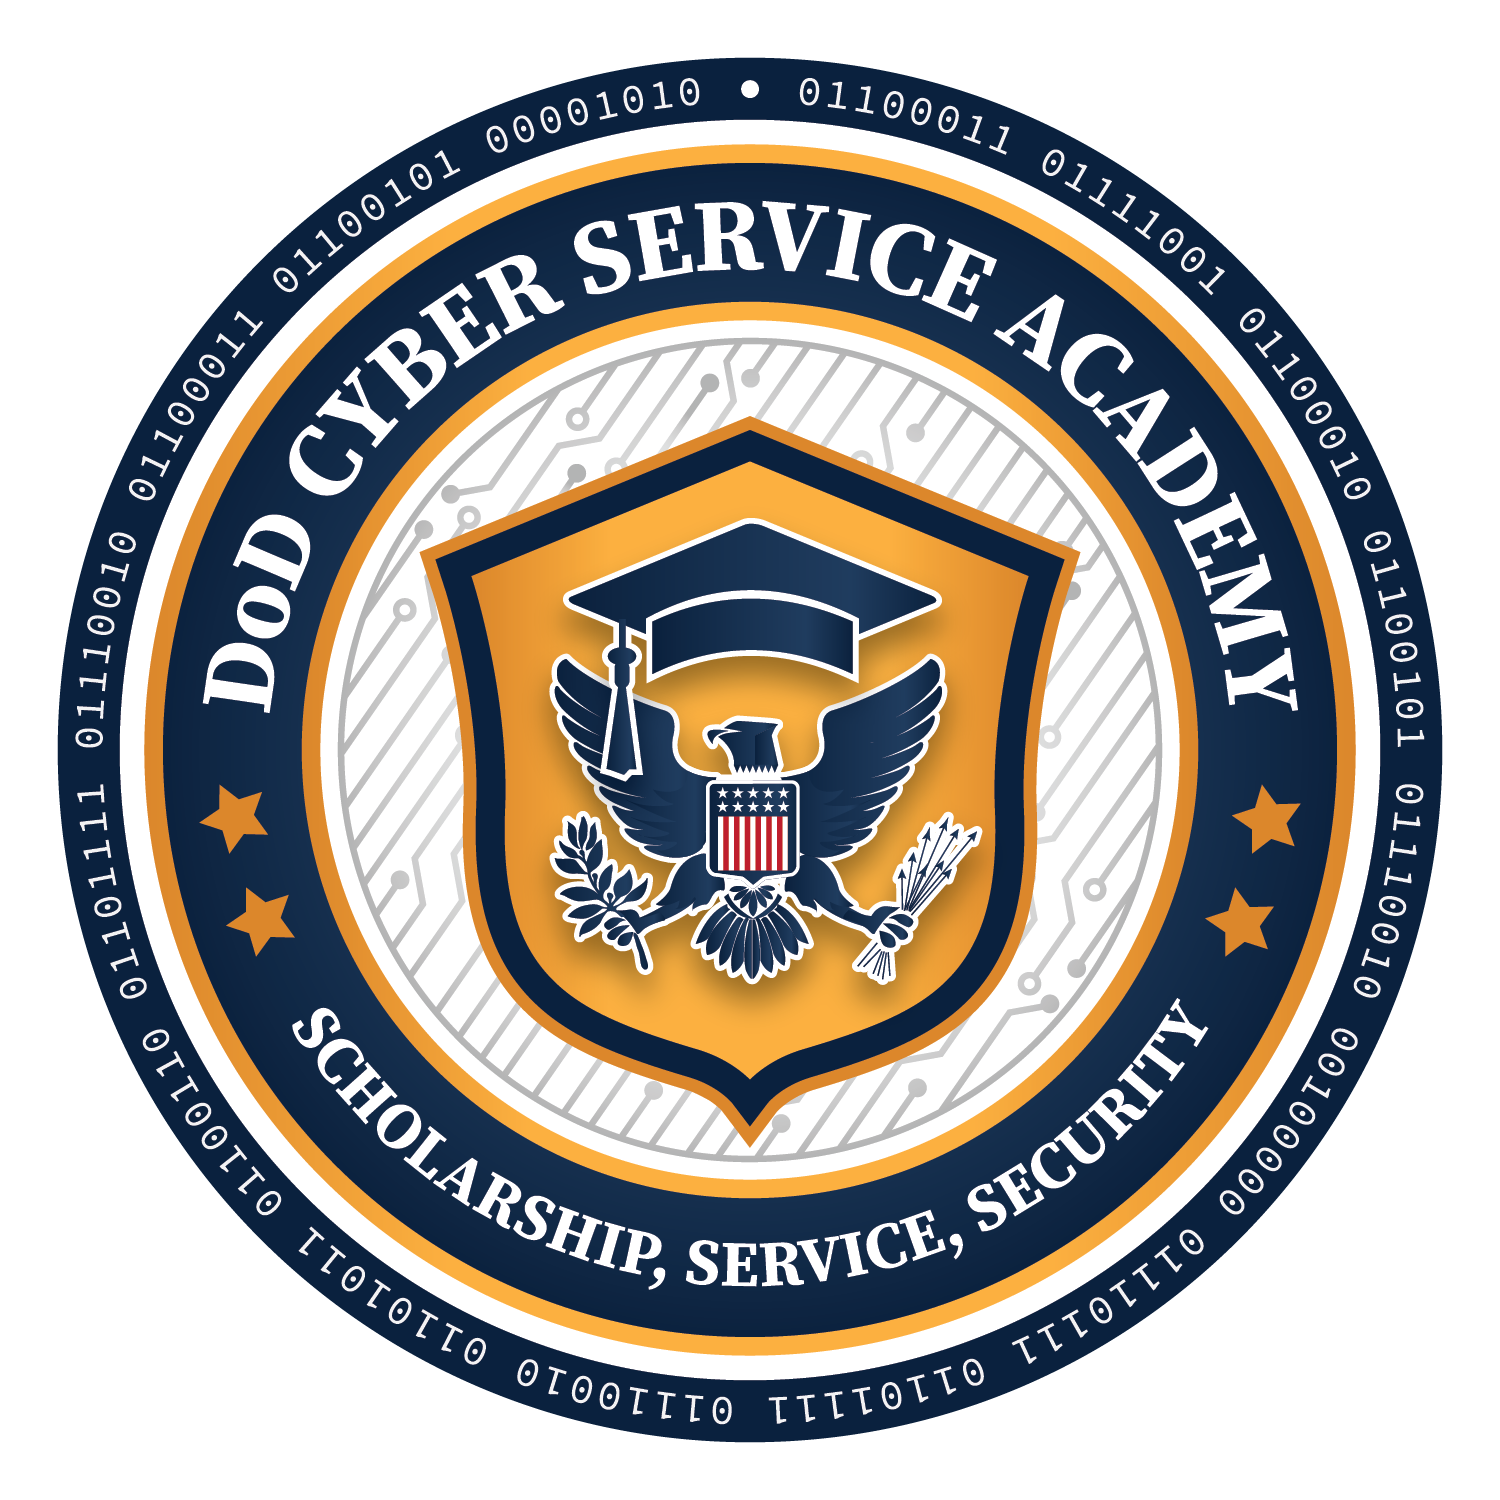 Dod cyber service academy seal